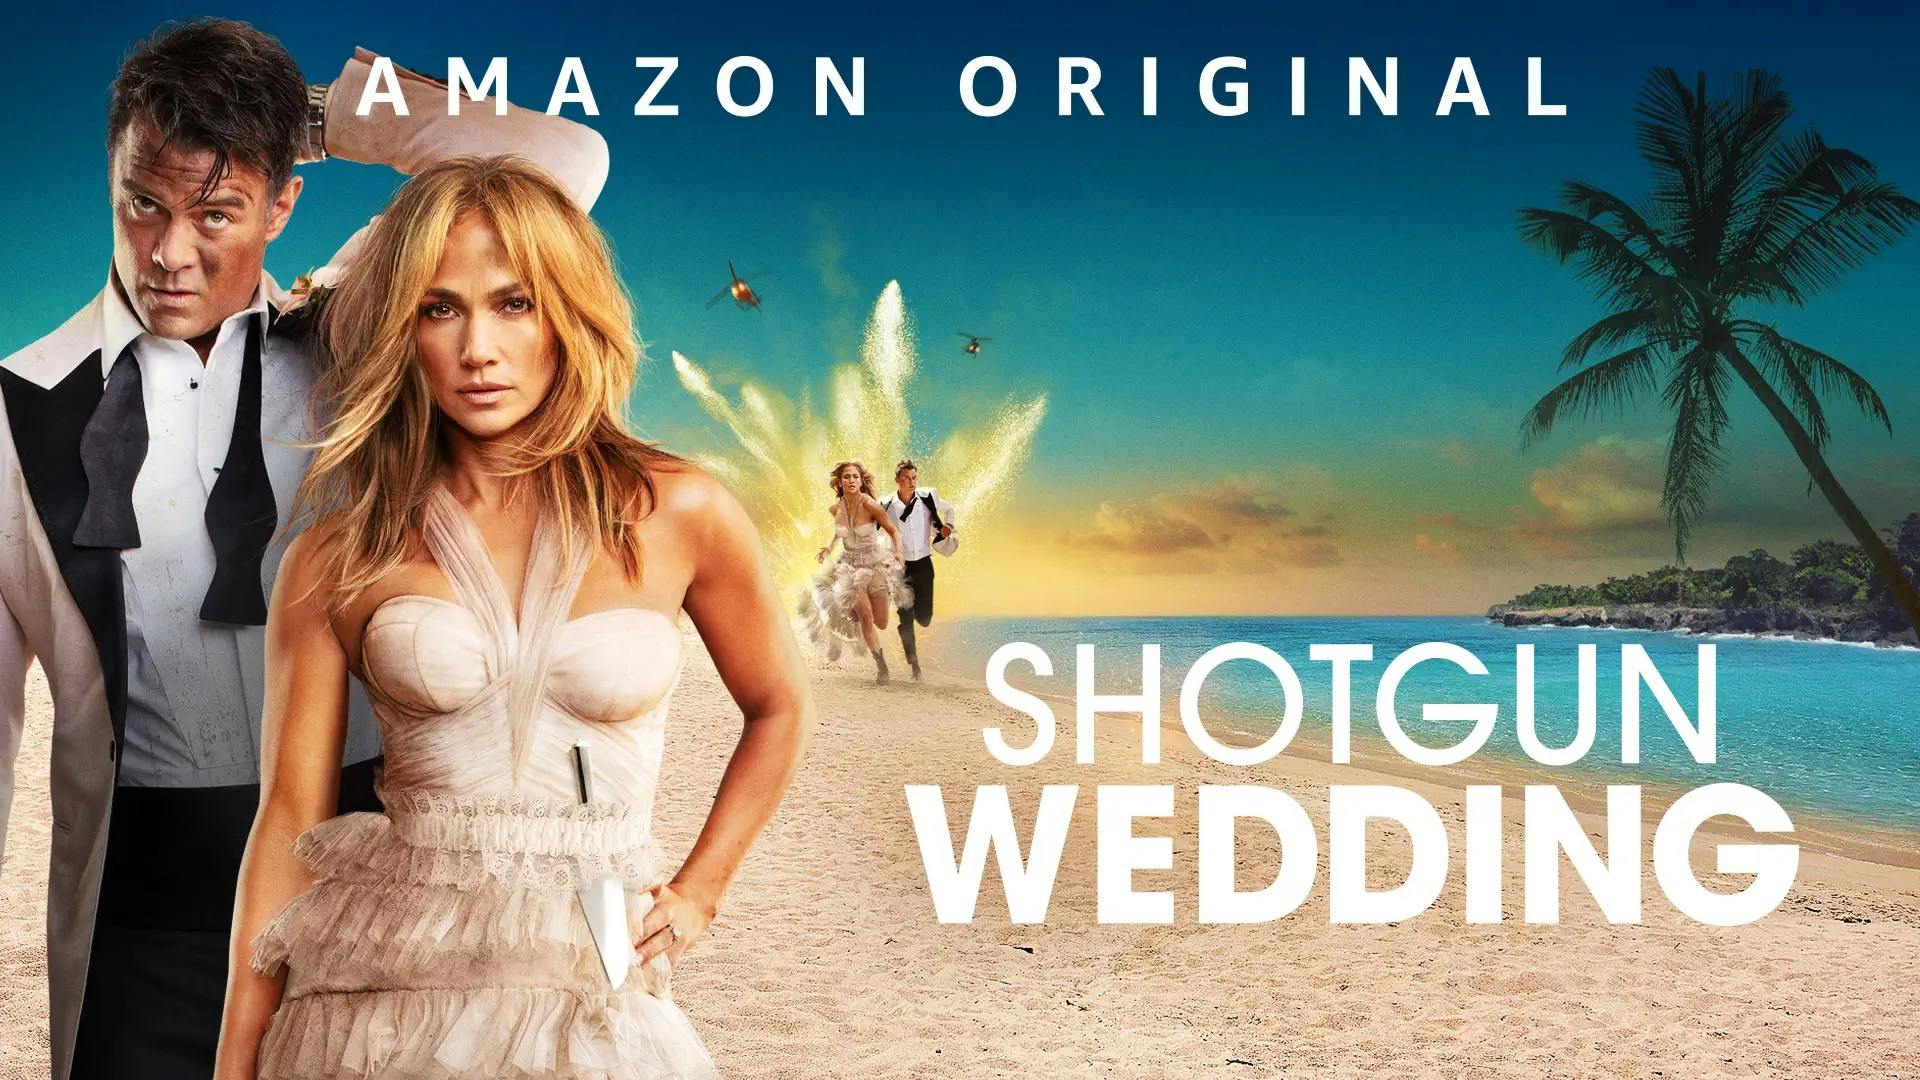 The thumbnail cover for the movie Shotgun Wedding